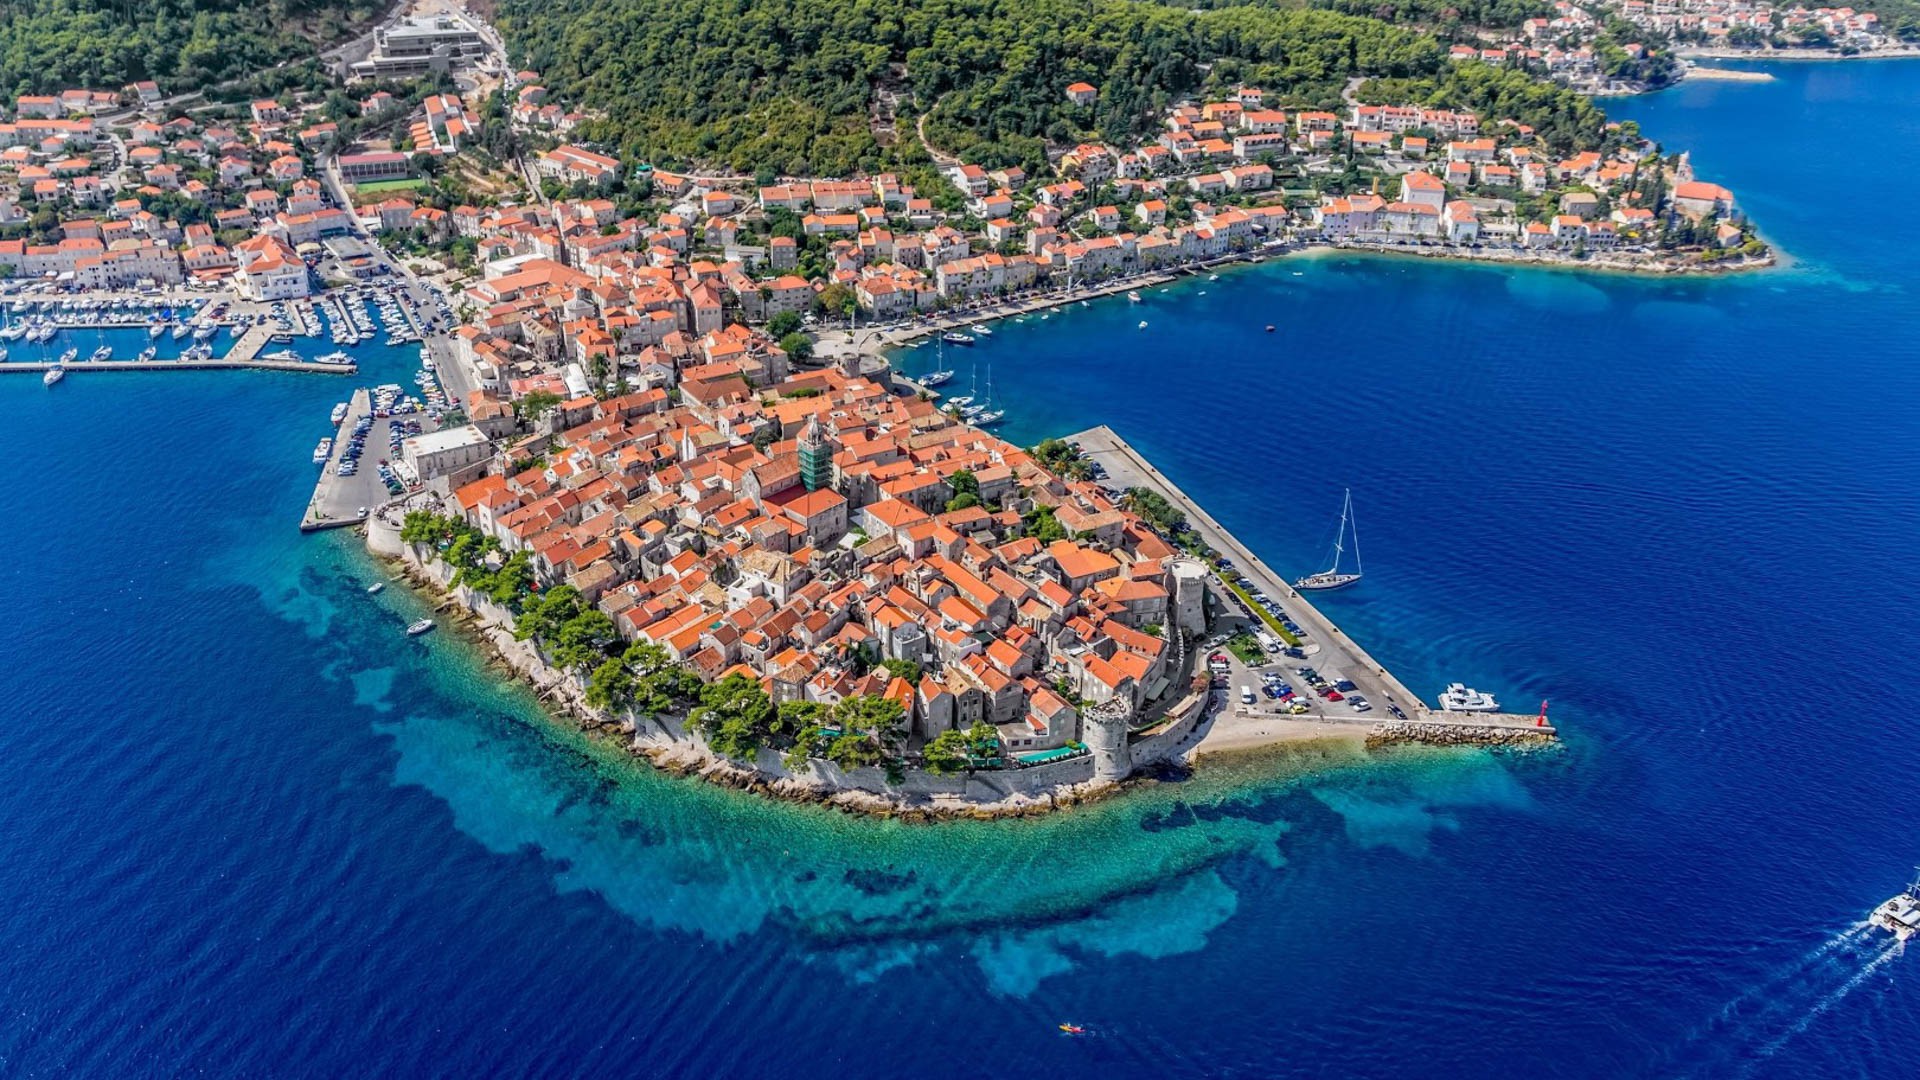 Korčula - Adriatic Sea | Croatia Cruise Croatia Cruise